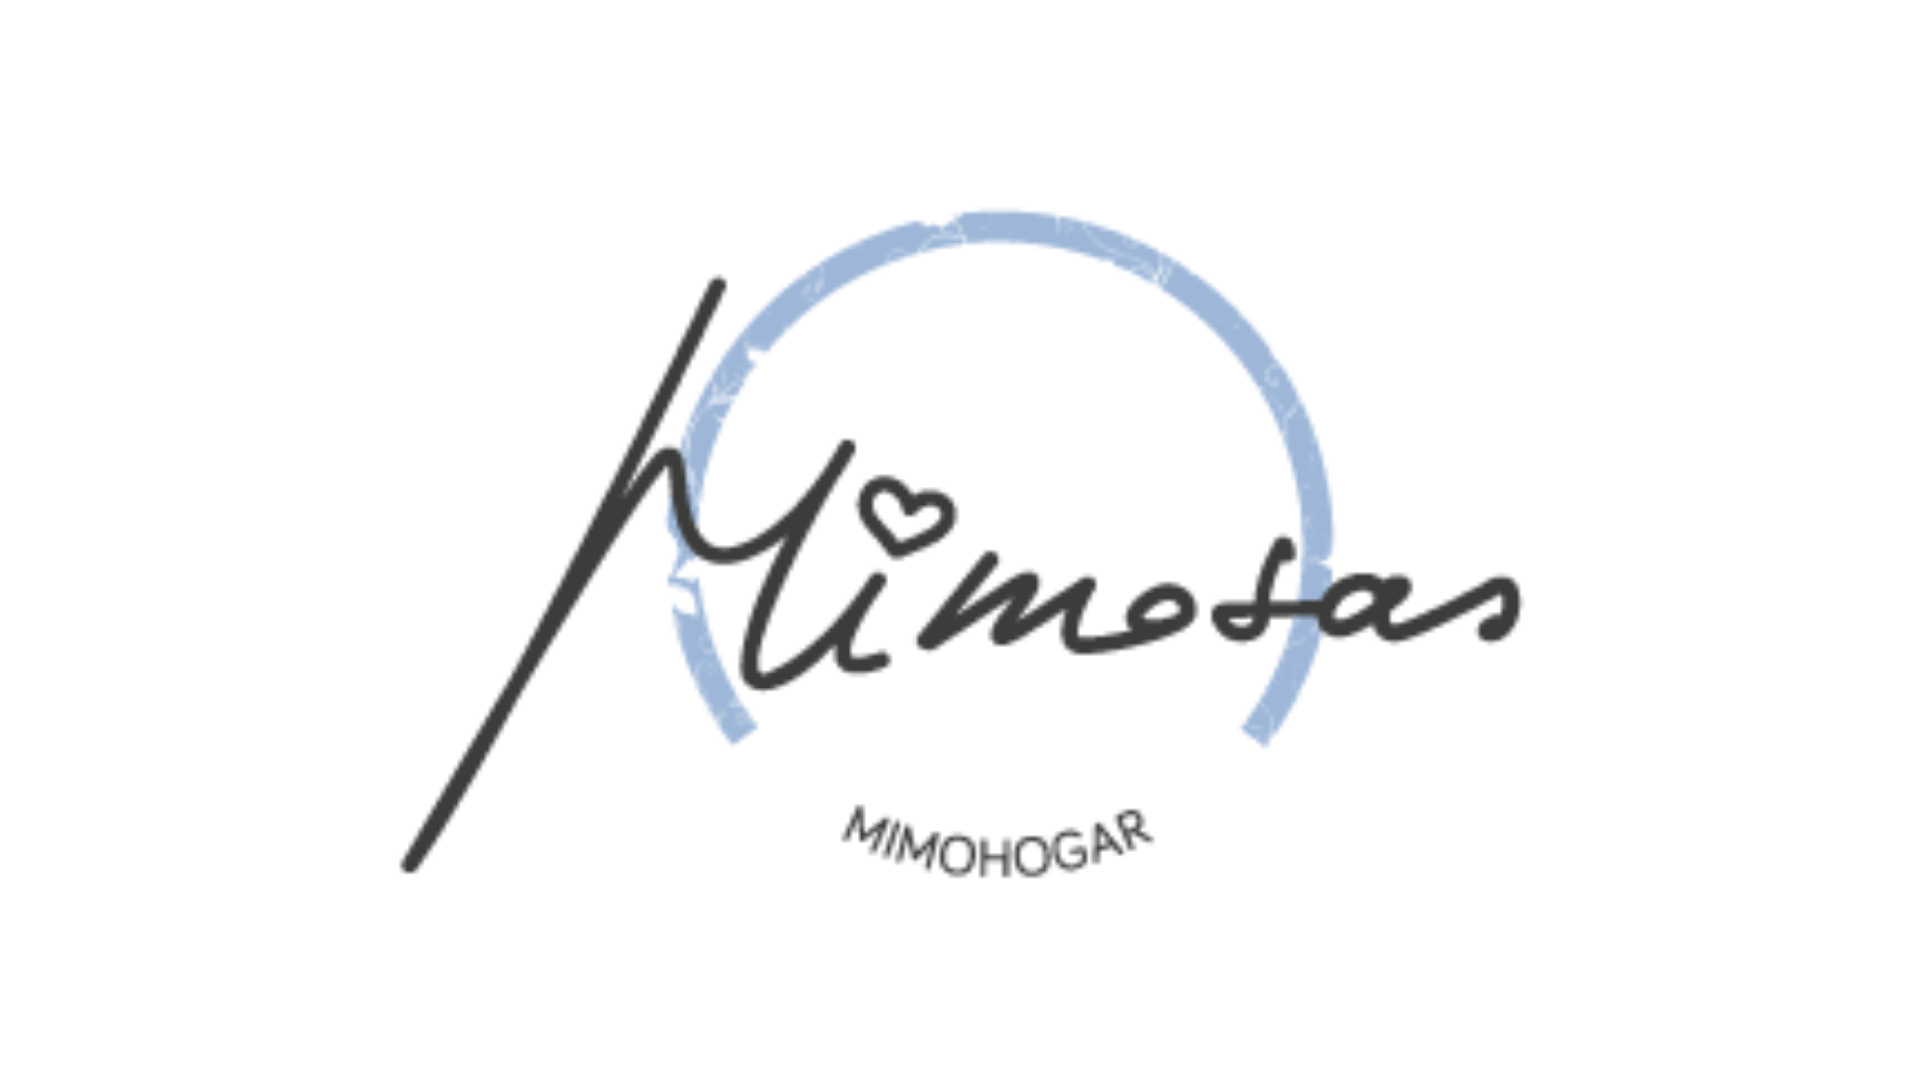 MIMOHOGAR